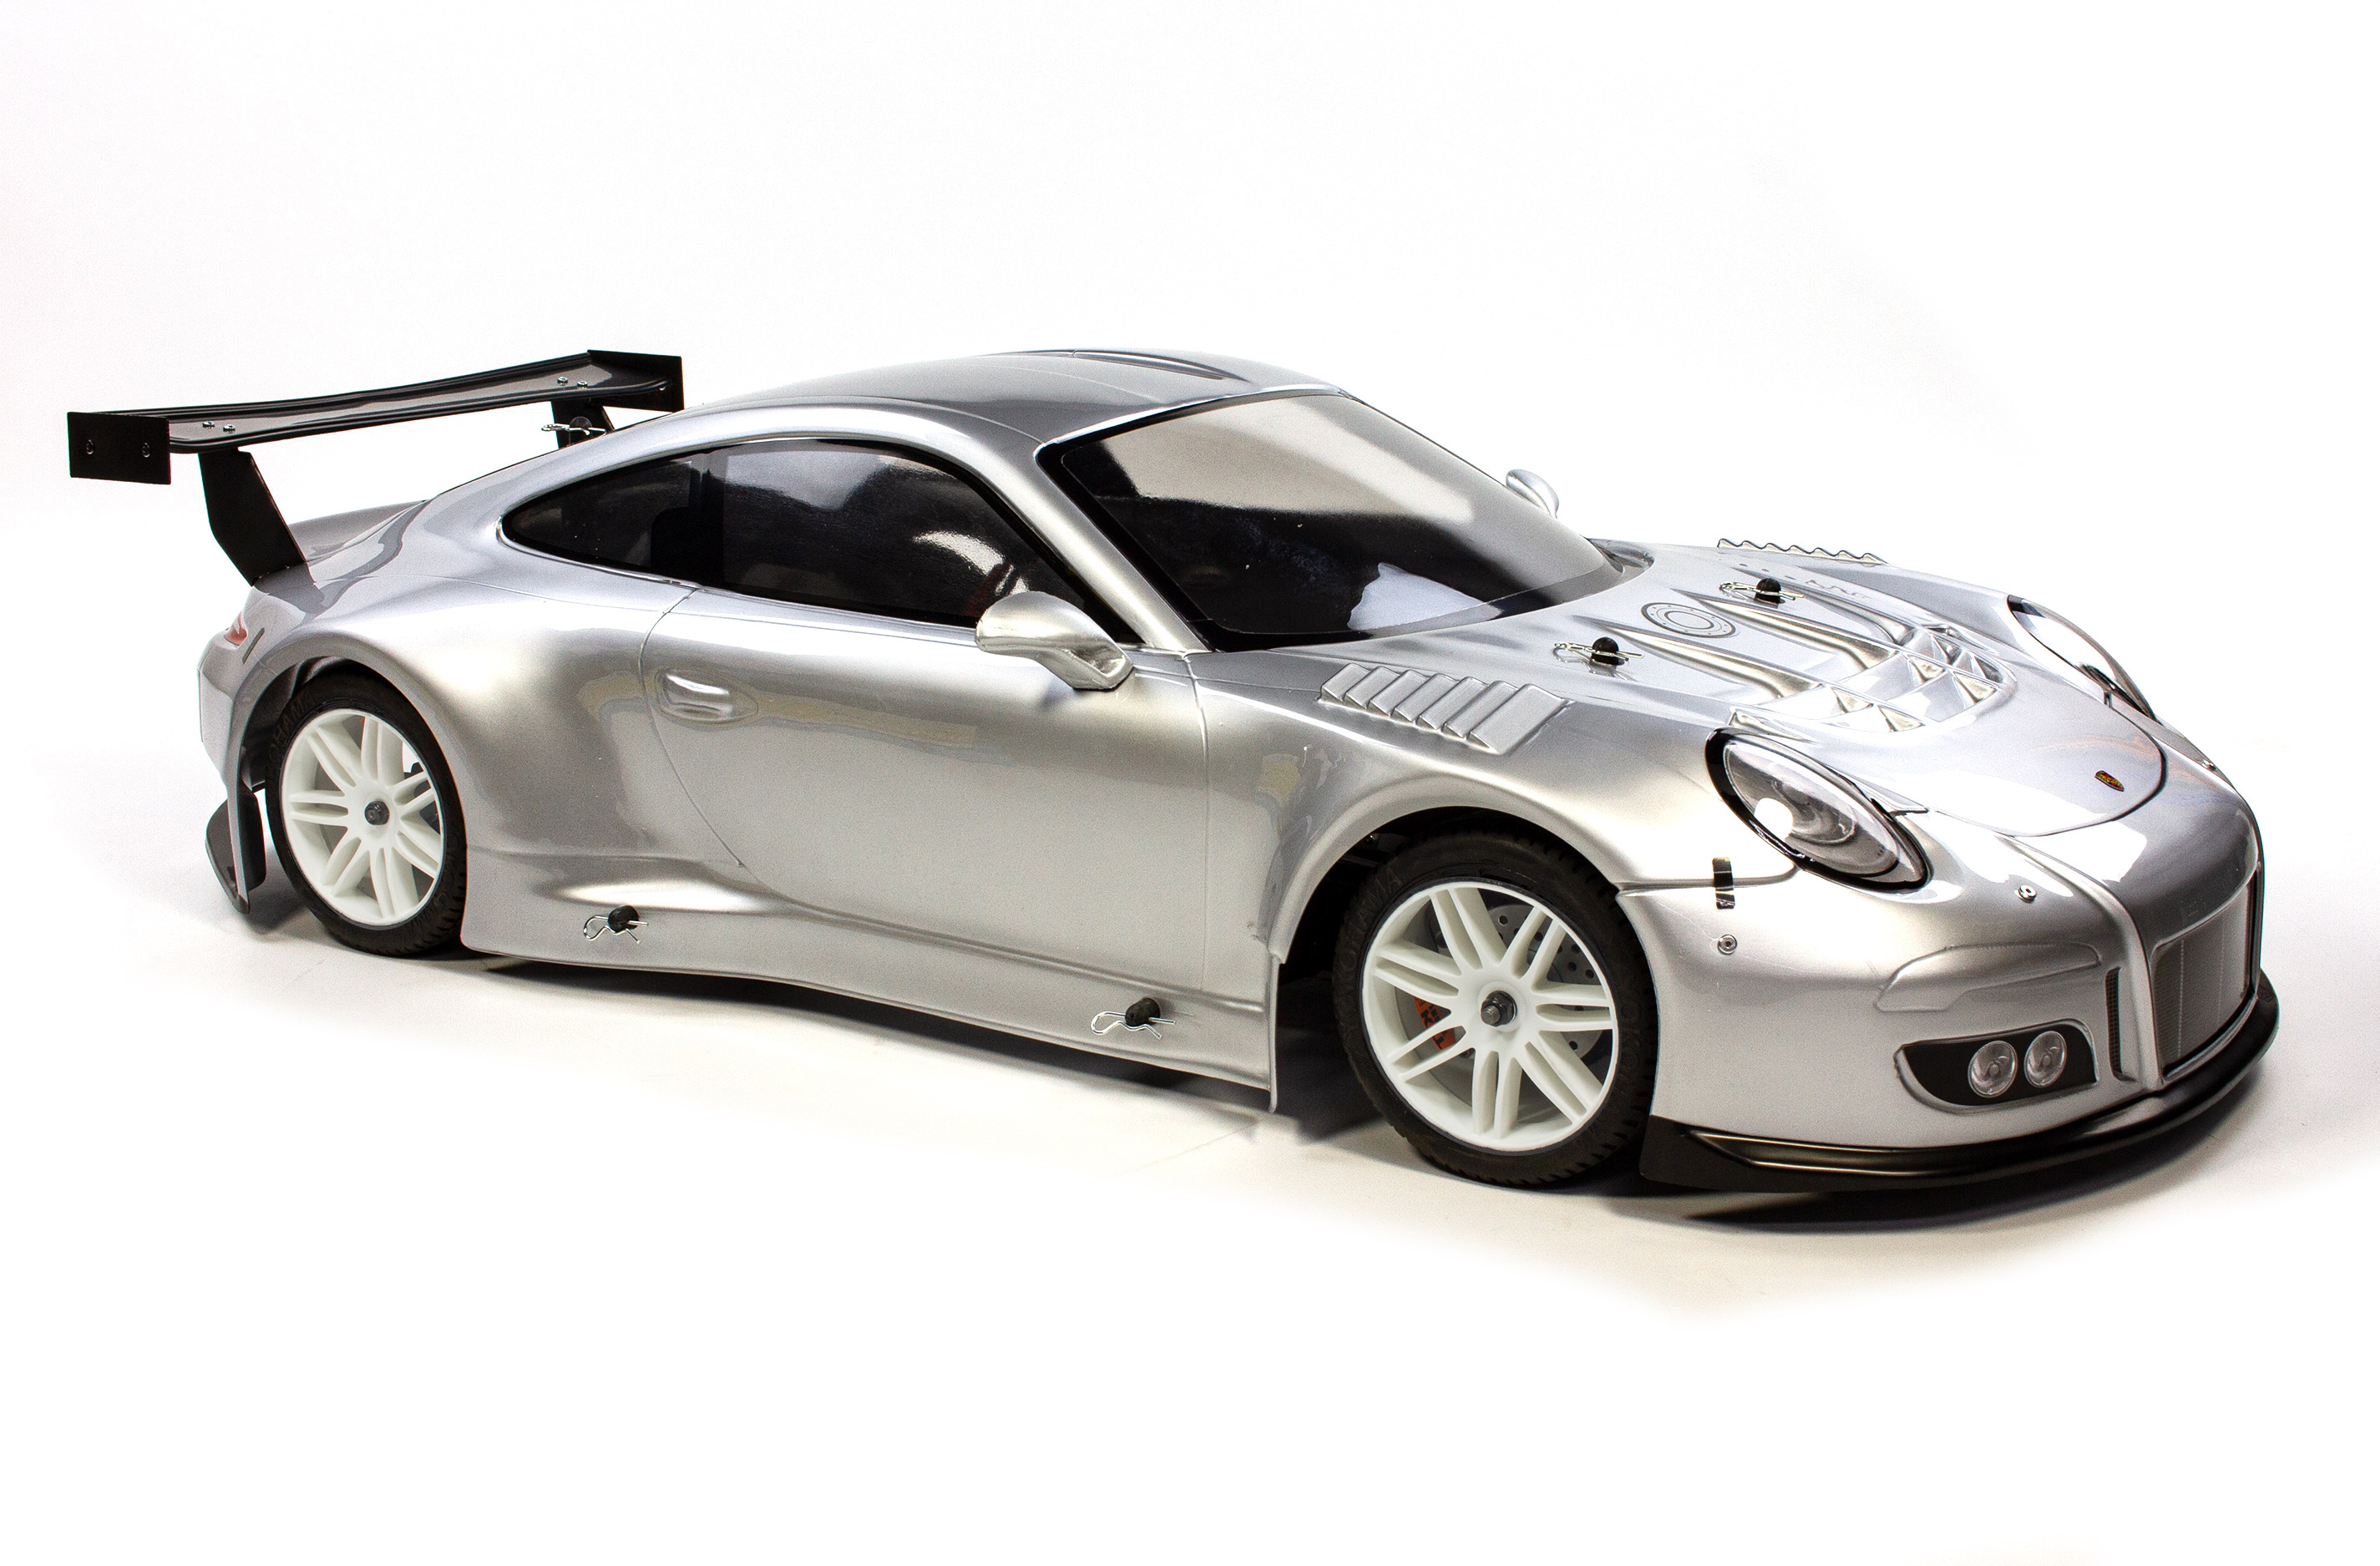 5189 FG Porsche 911 GT3R  body shell, Wheelbase 530 mm, painted, slightly damaged